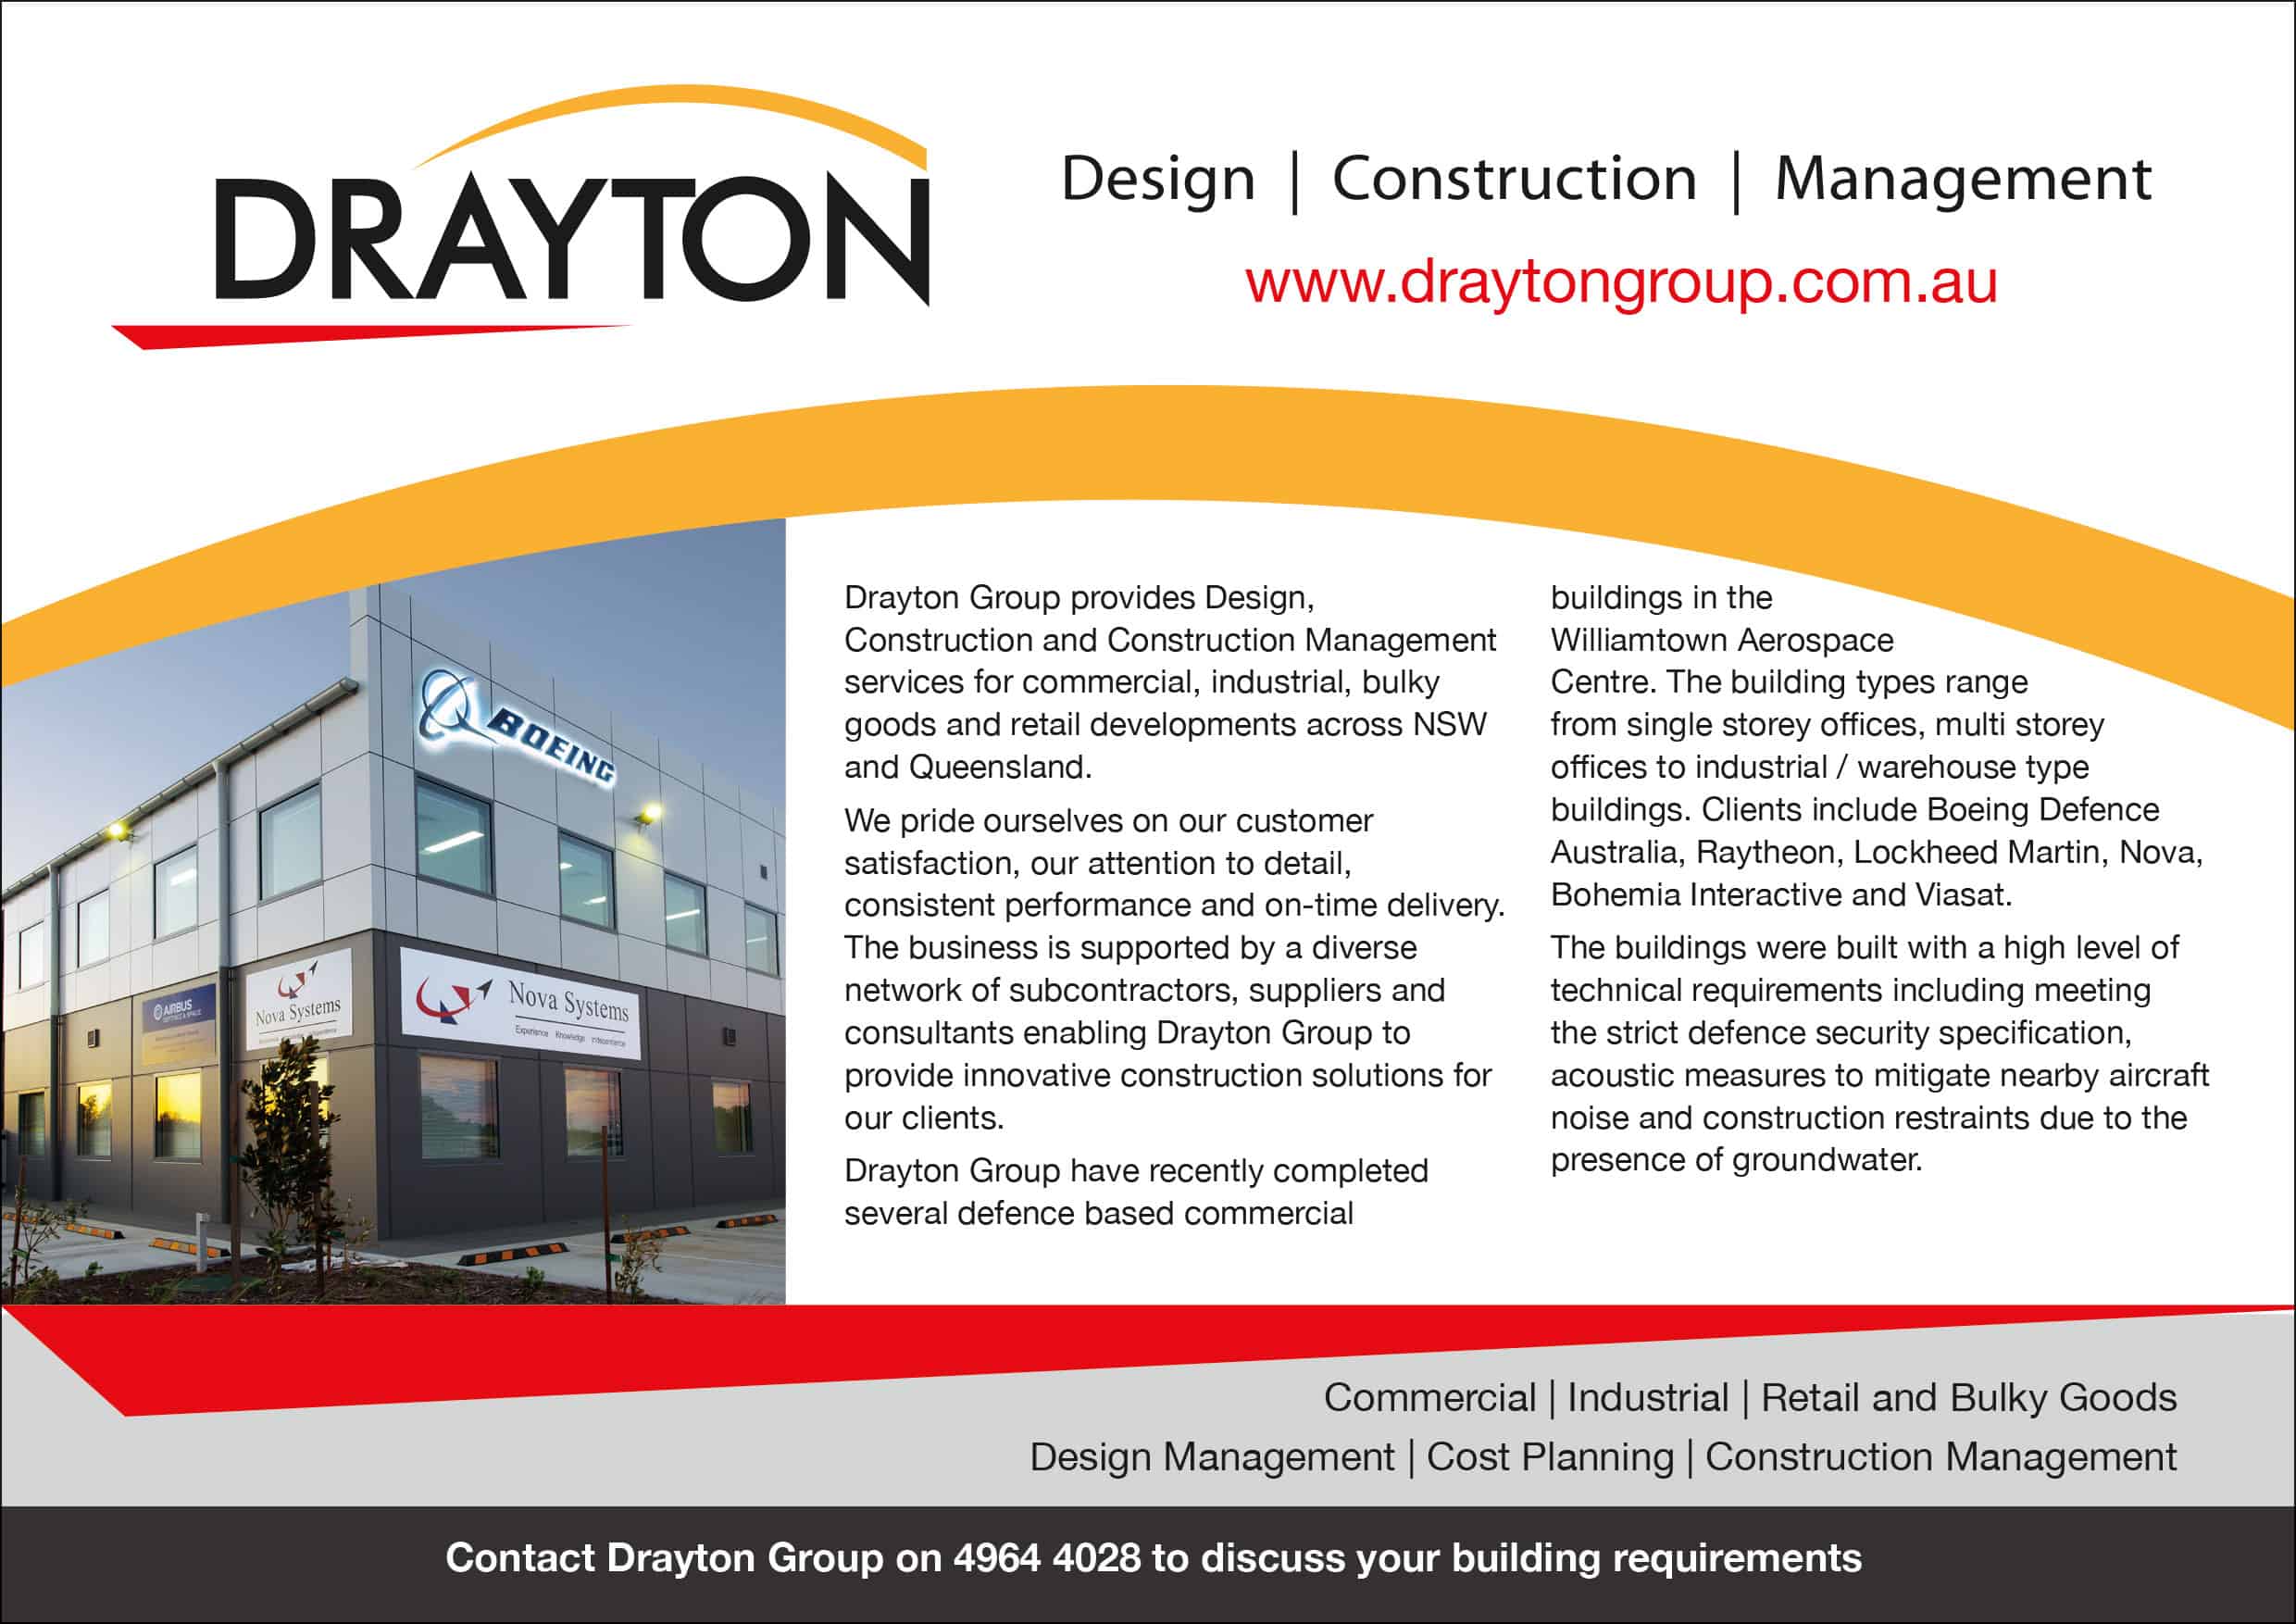 Drayton Group - Design, Construction, Management